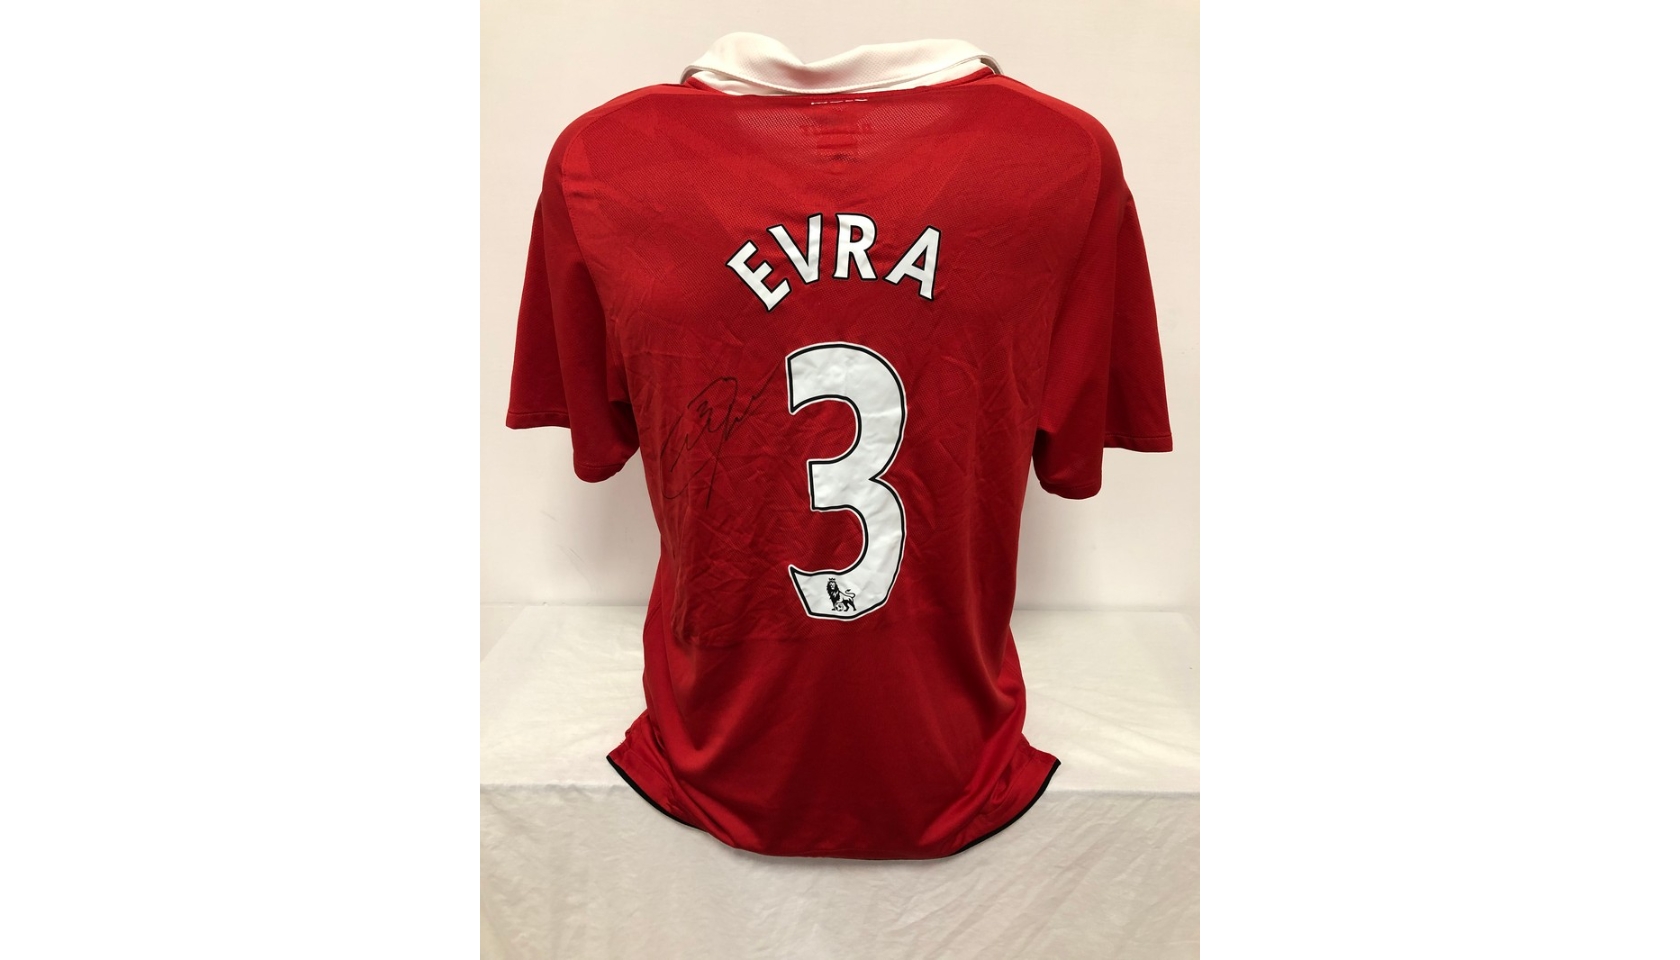 Soccerstarz Manchester United FC Patrice Evra Home Kit